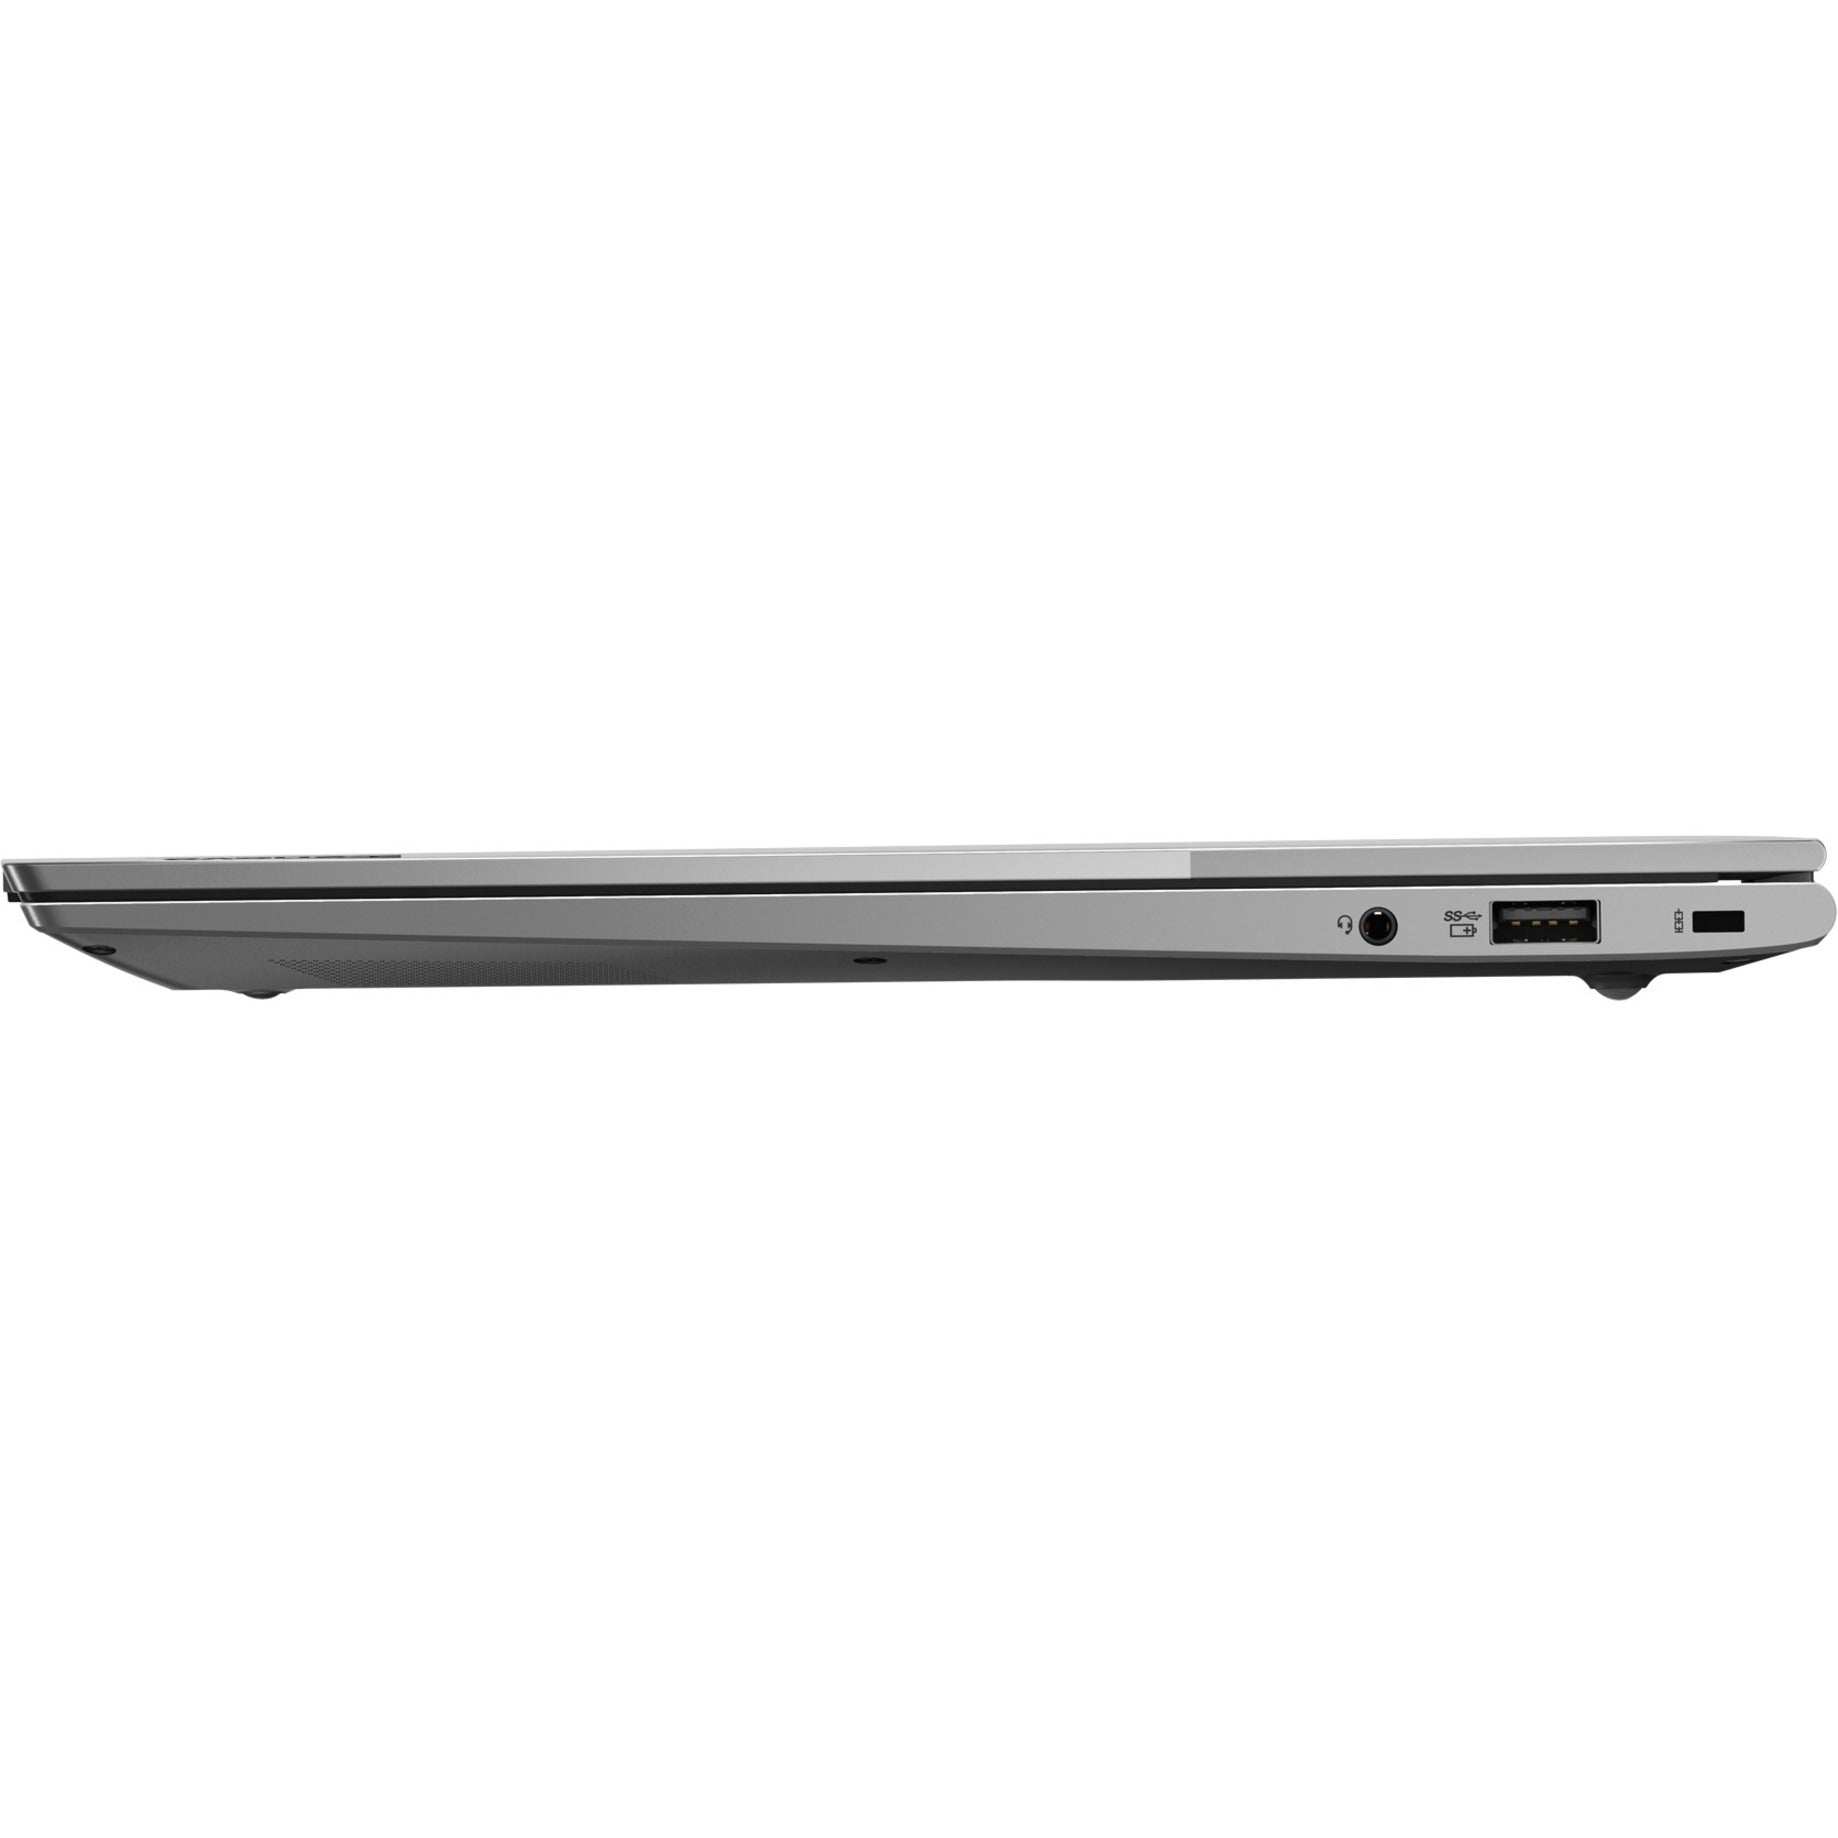 Lenovo ThinkBook 13s Gen4 Notebook - Intel Core i5, 8GB RAM, 256GB SSD, Windows 11 Pro [Discontinued]